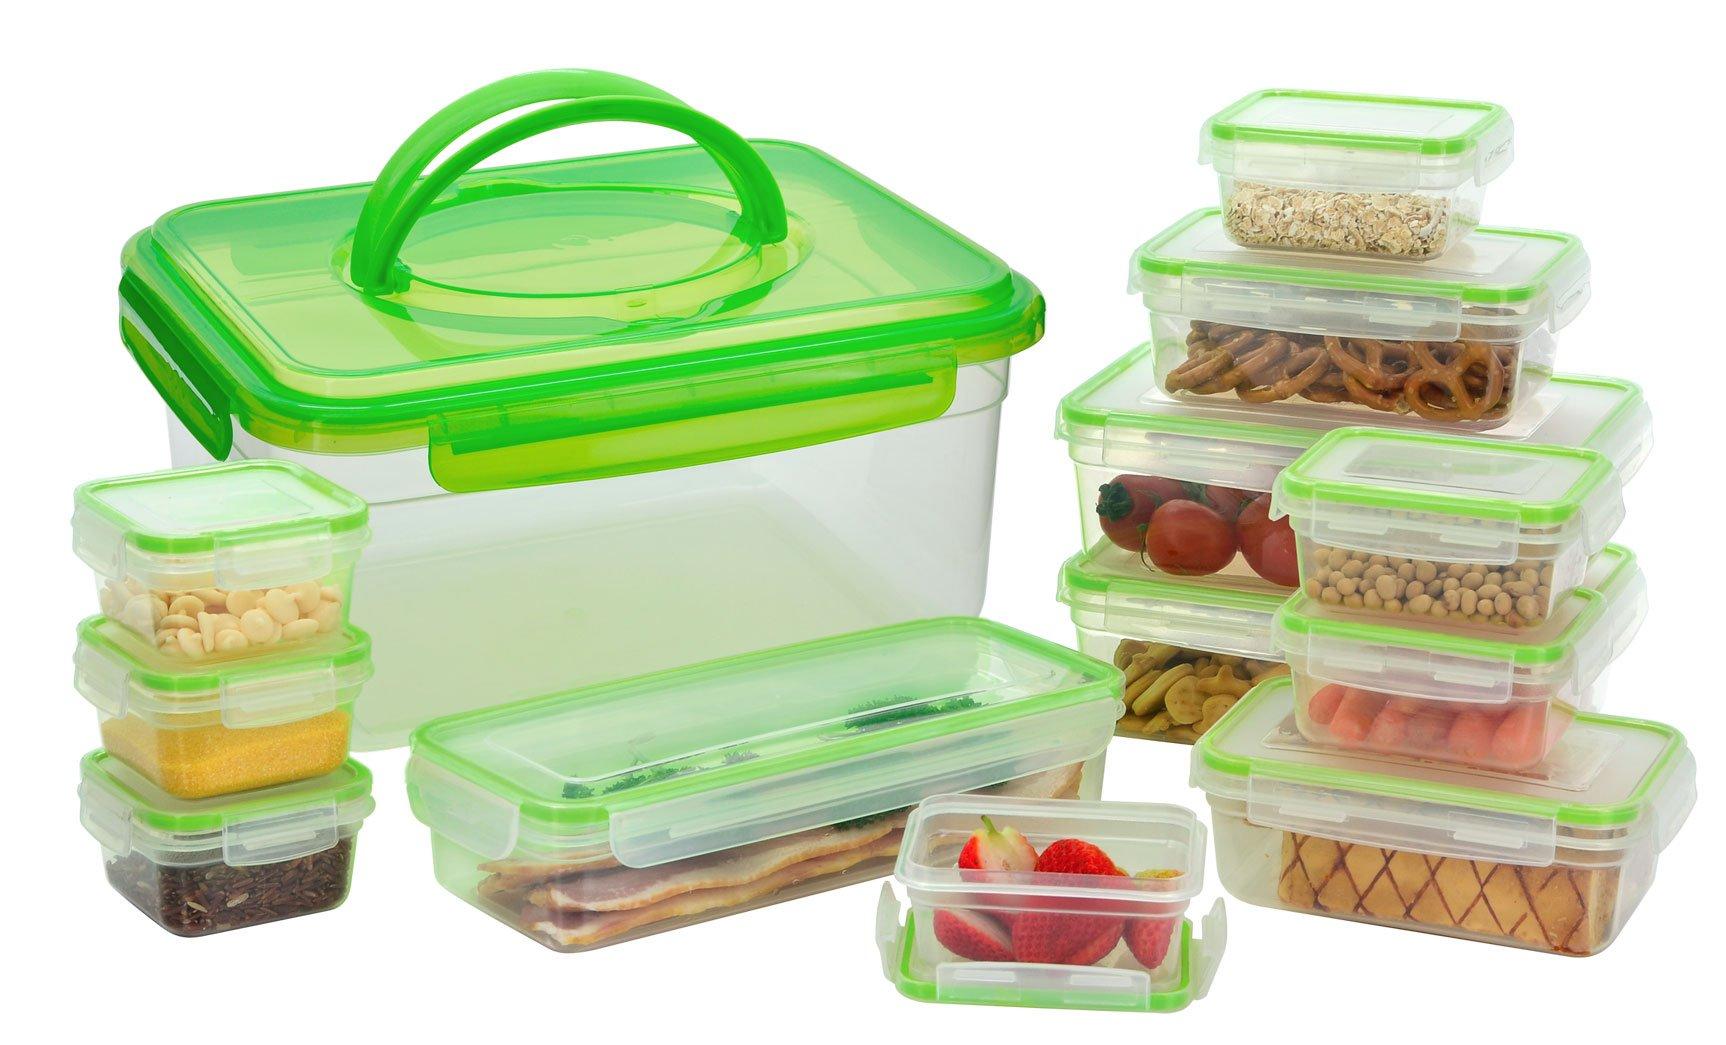 HI-GEAR 13 Piece Compact Food Storage Set, Green